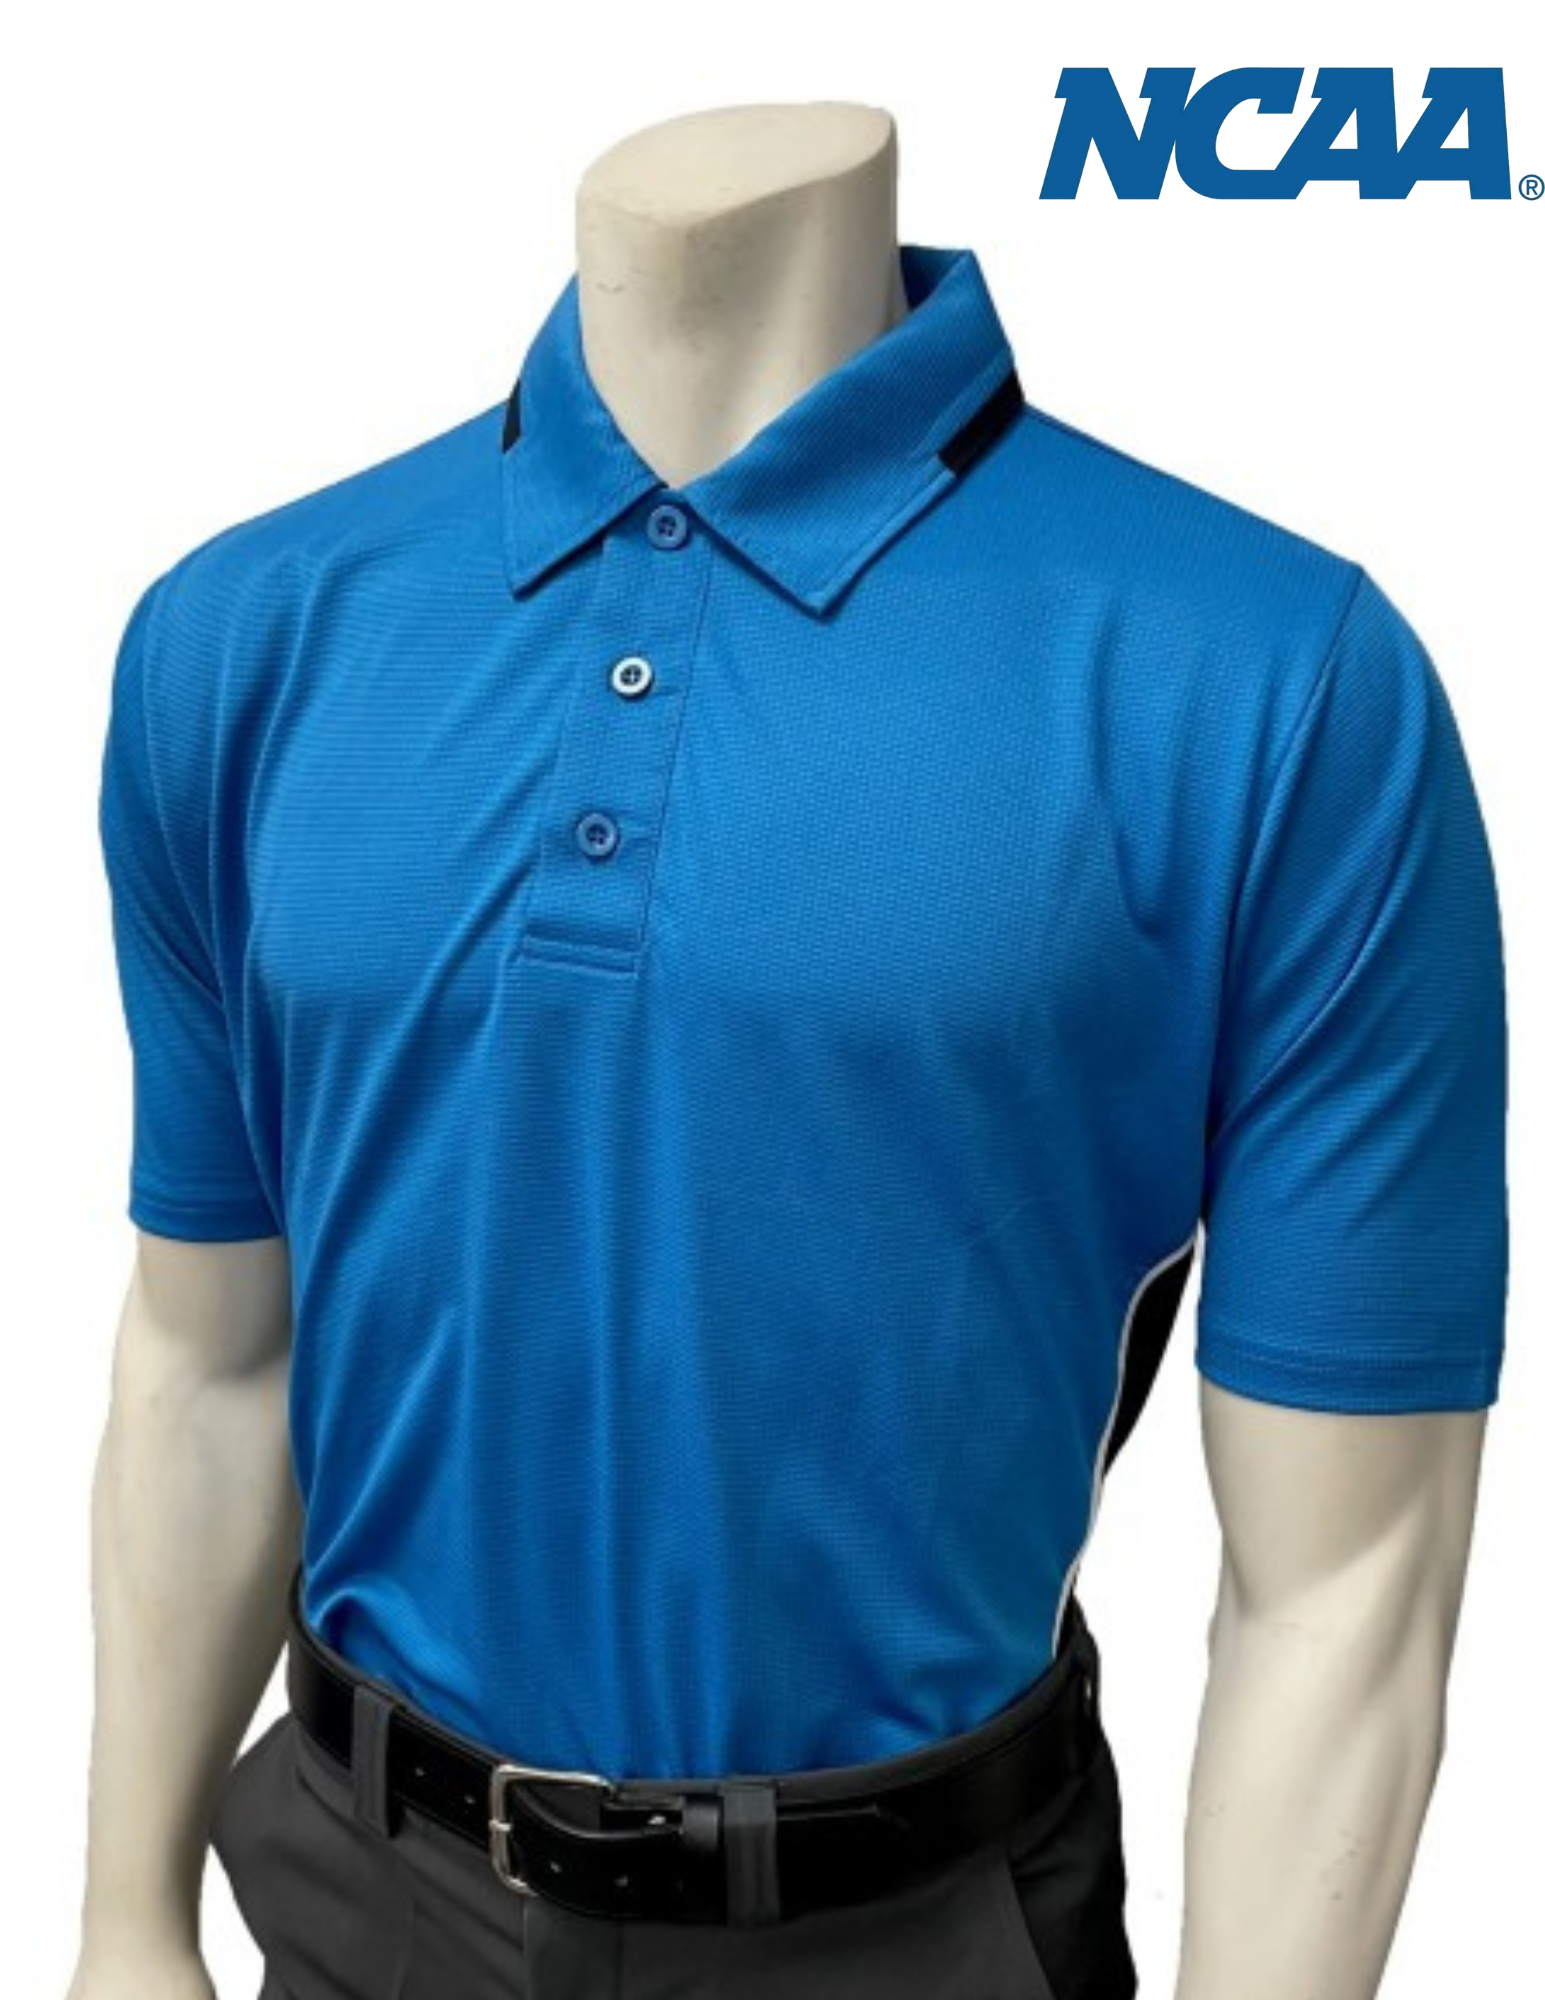 Men's BODY FLEX NCAA SOFTBALL Style Short Sleeve - Bright Blue